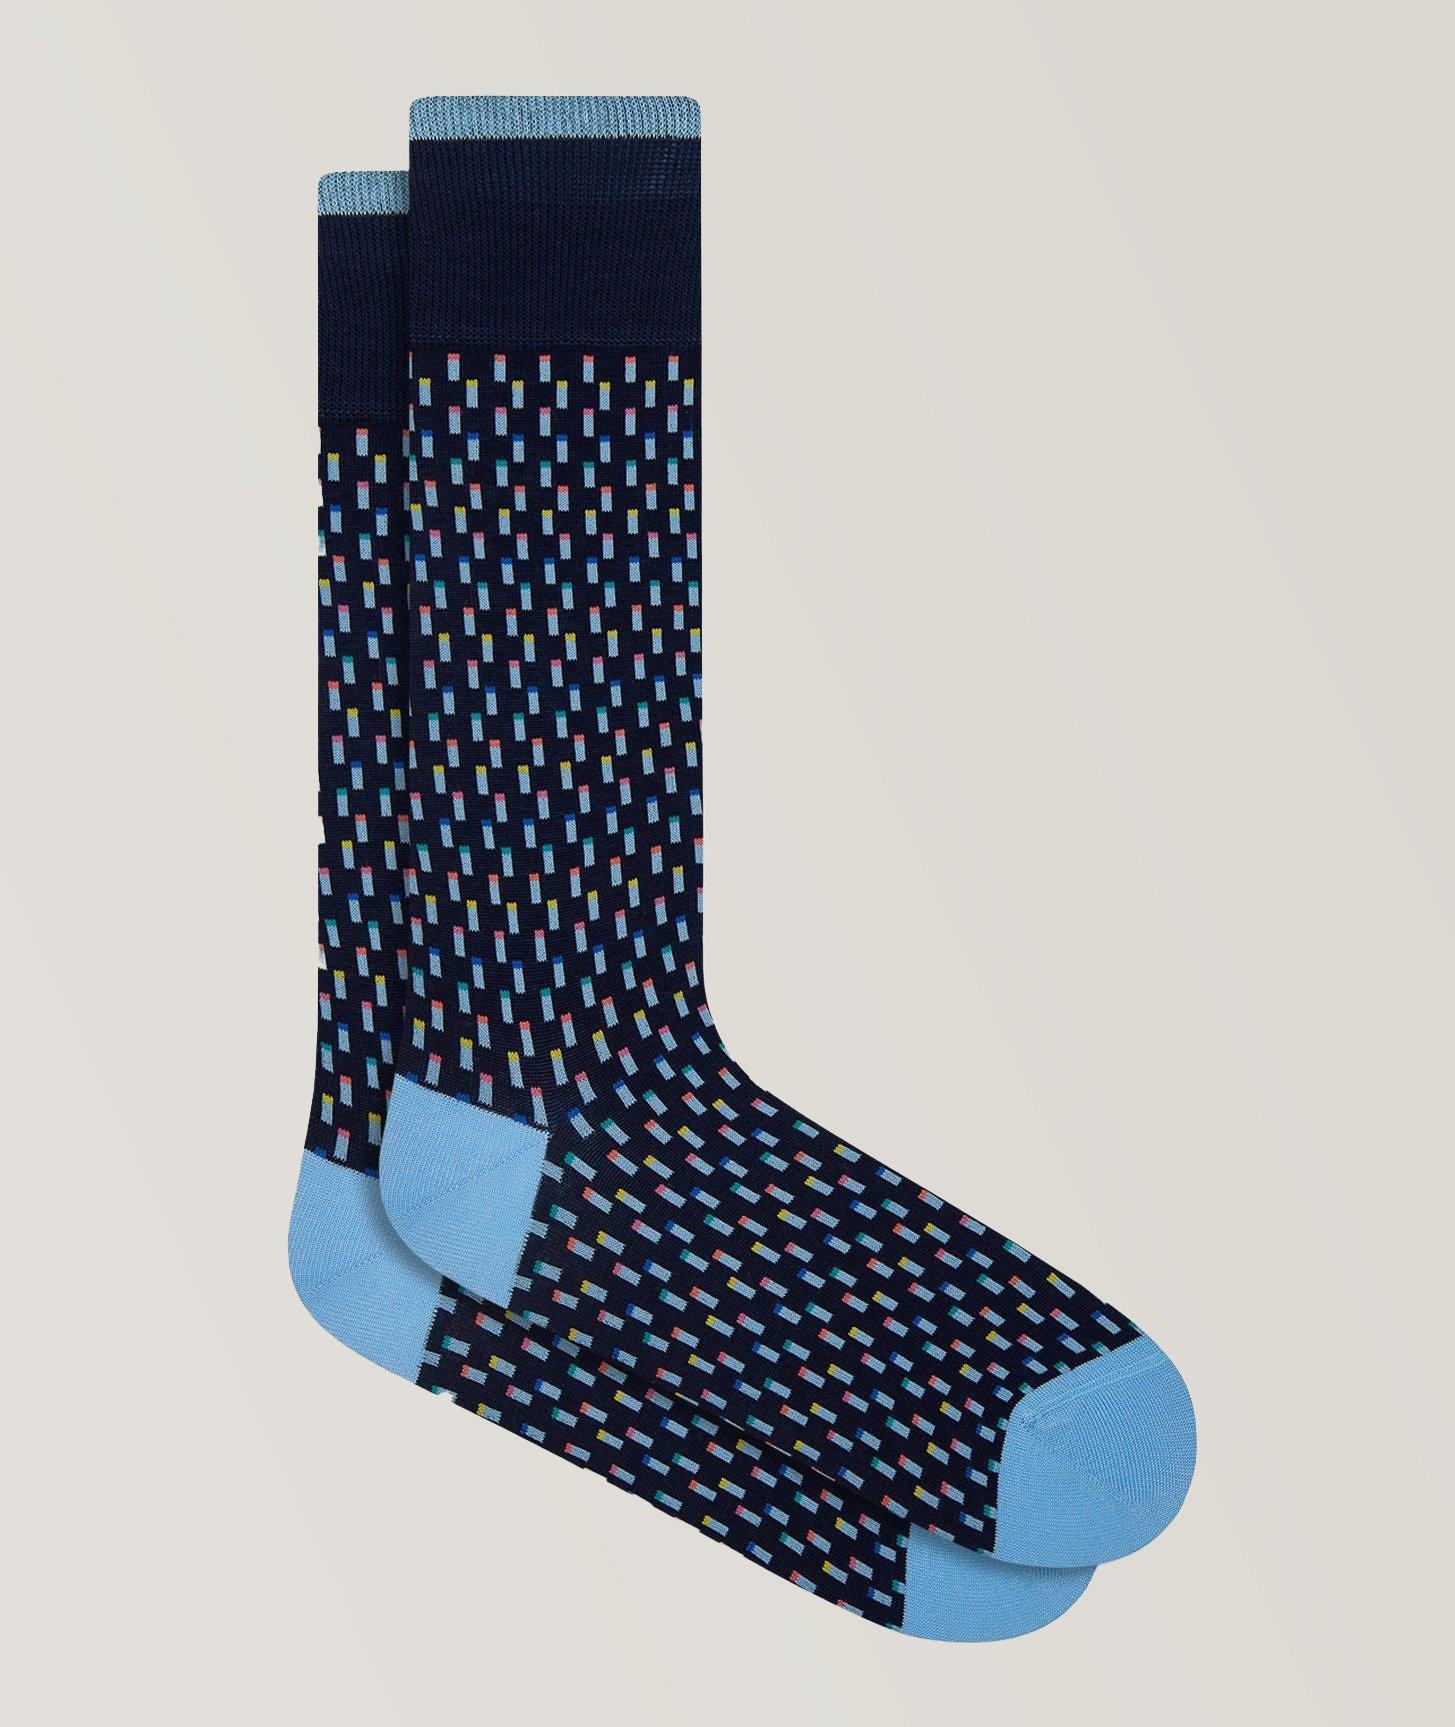 Multi-Line Dotted Print Stretch-Cotton Socks image 0